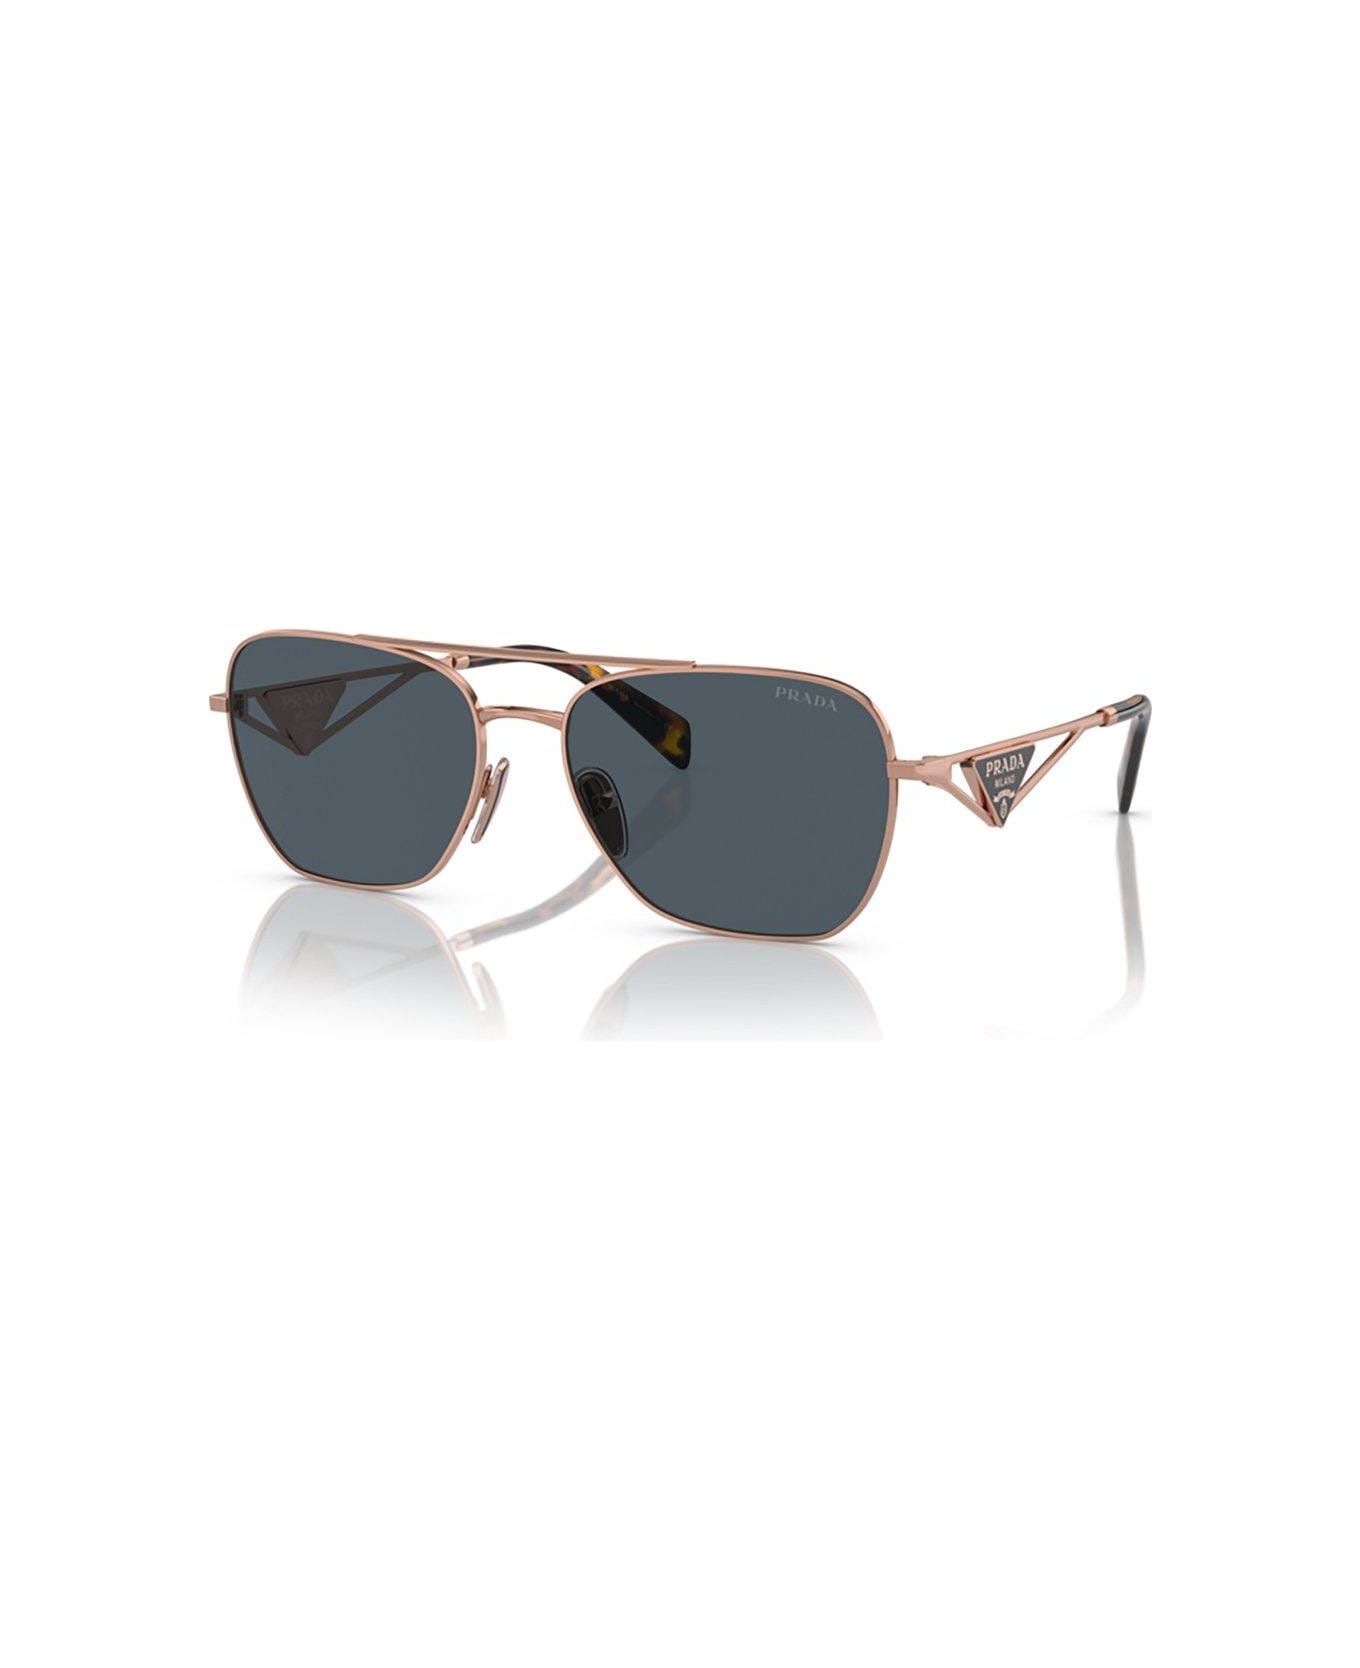 Prada Eyewear Pilot Frame Sunglasses Sunglasses - SVF09T Rose Gold